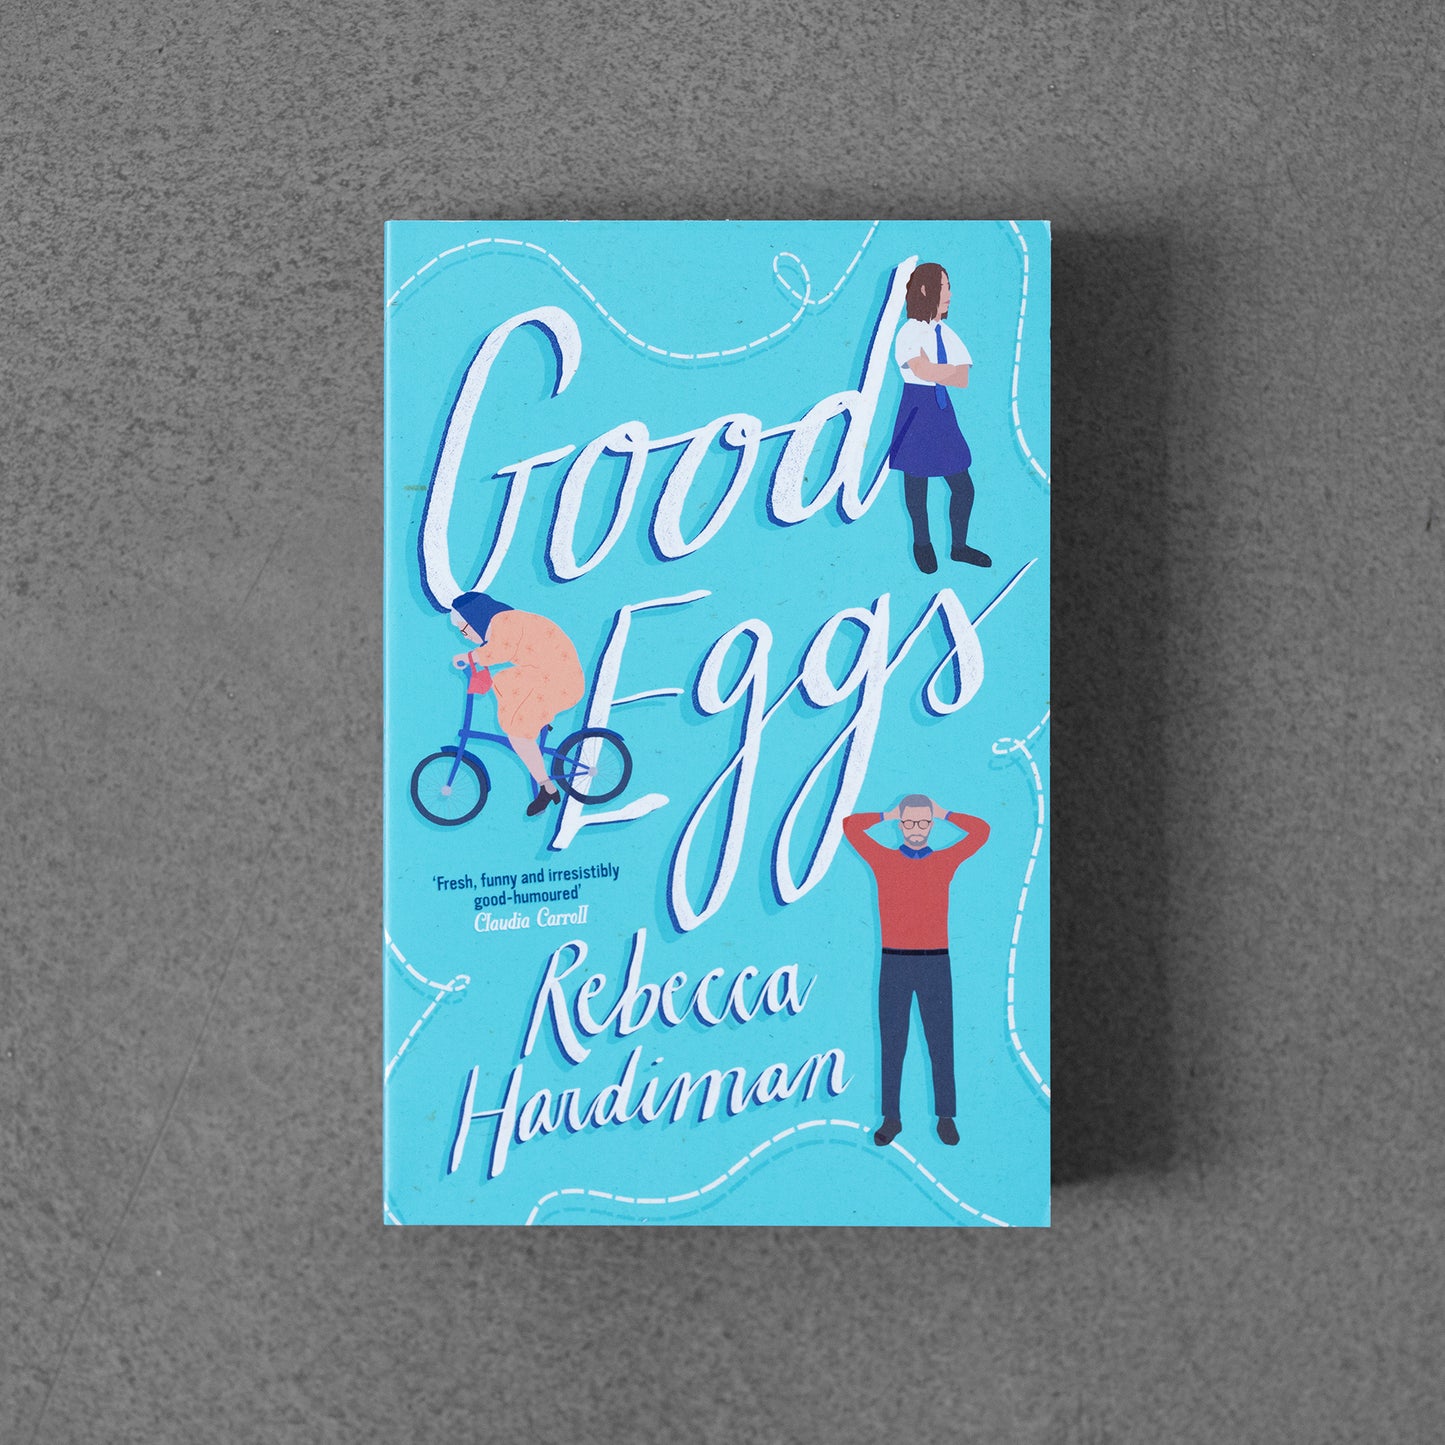 Good Eggs – Rebecca Hardiman